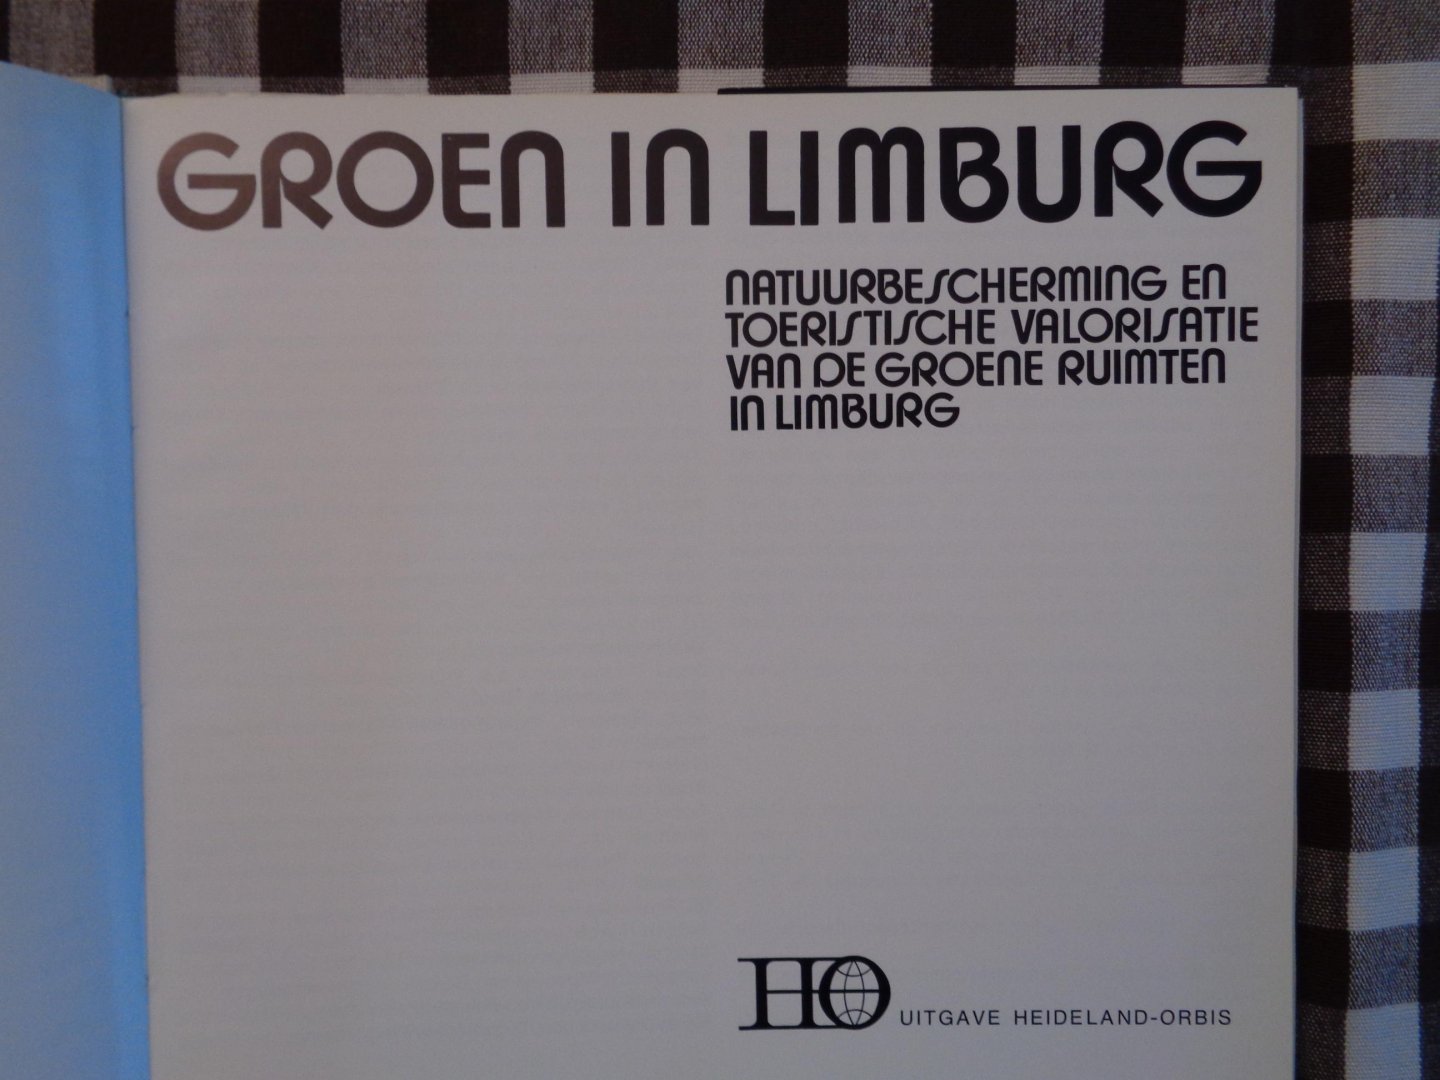 urbain mulkers-alb claessen - groen in limburg